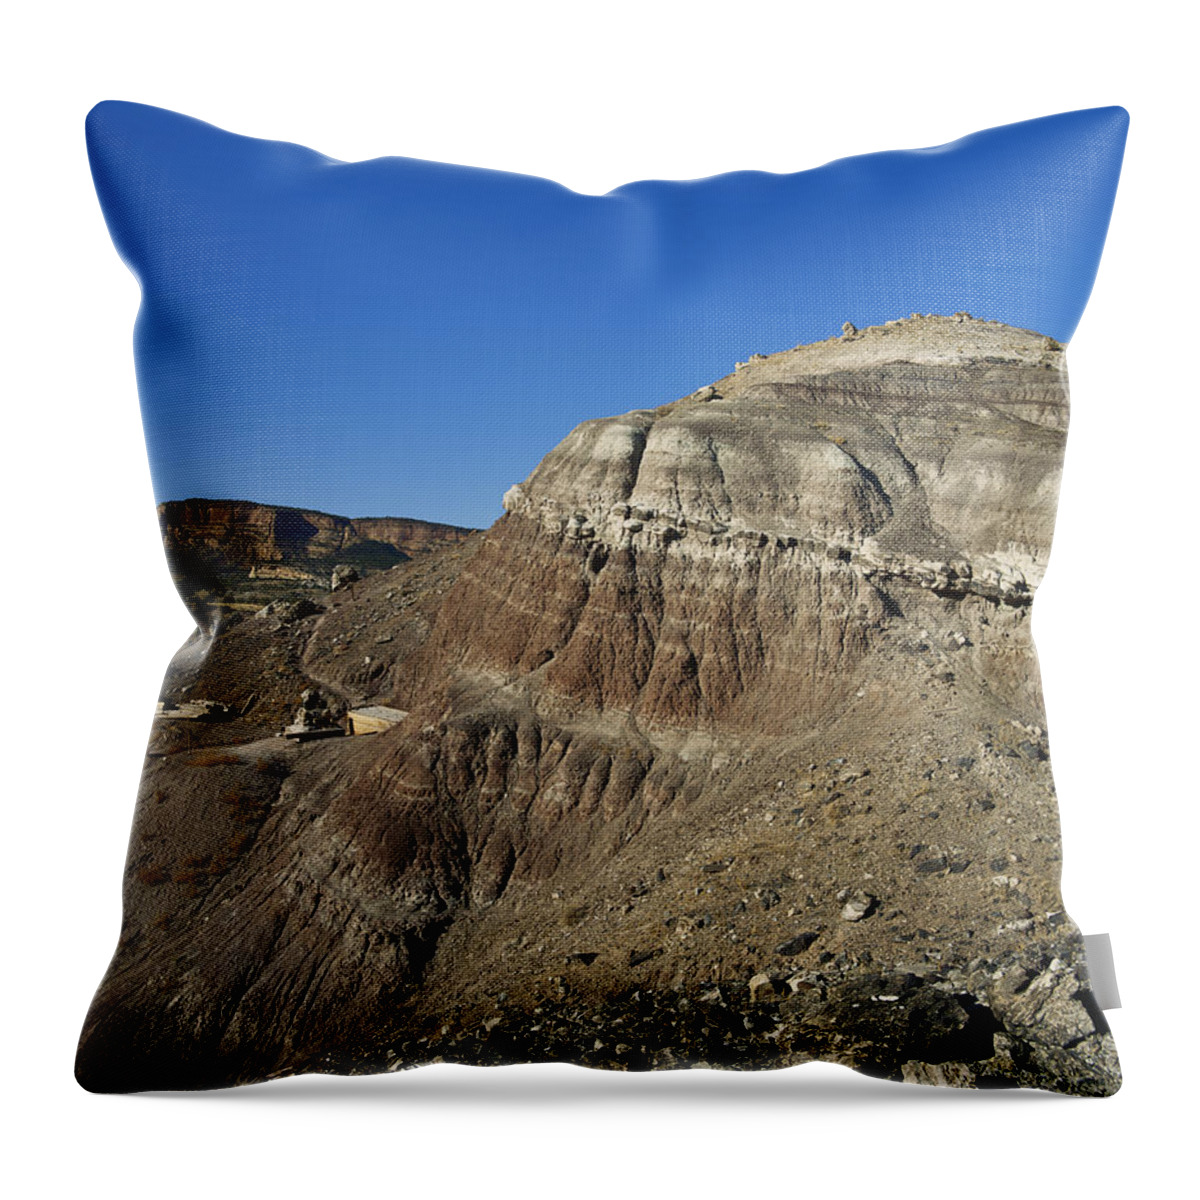 Dinosaur Hill Throw Pillow featuring the photograph Dinosaur Hill, Colorado by Francois Gohier